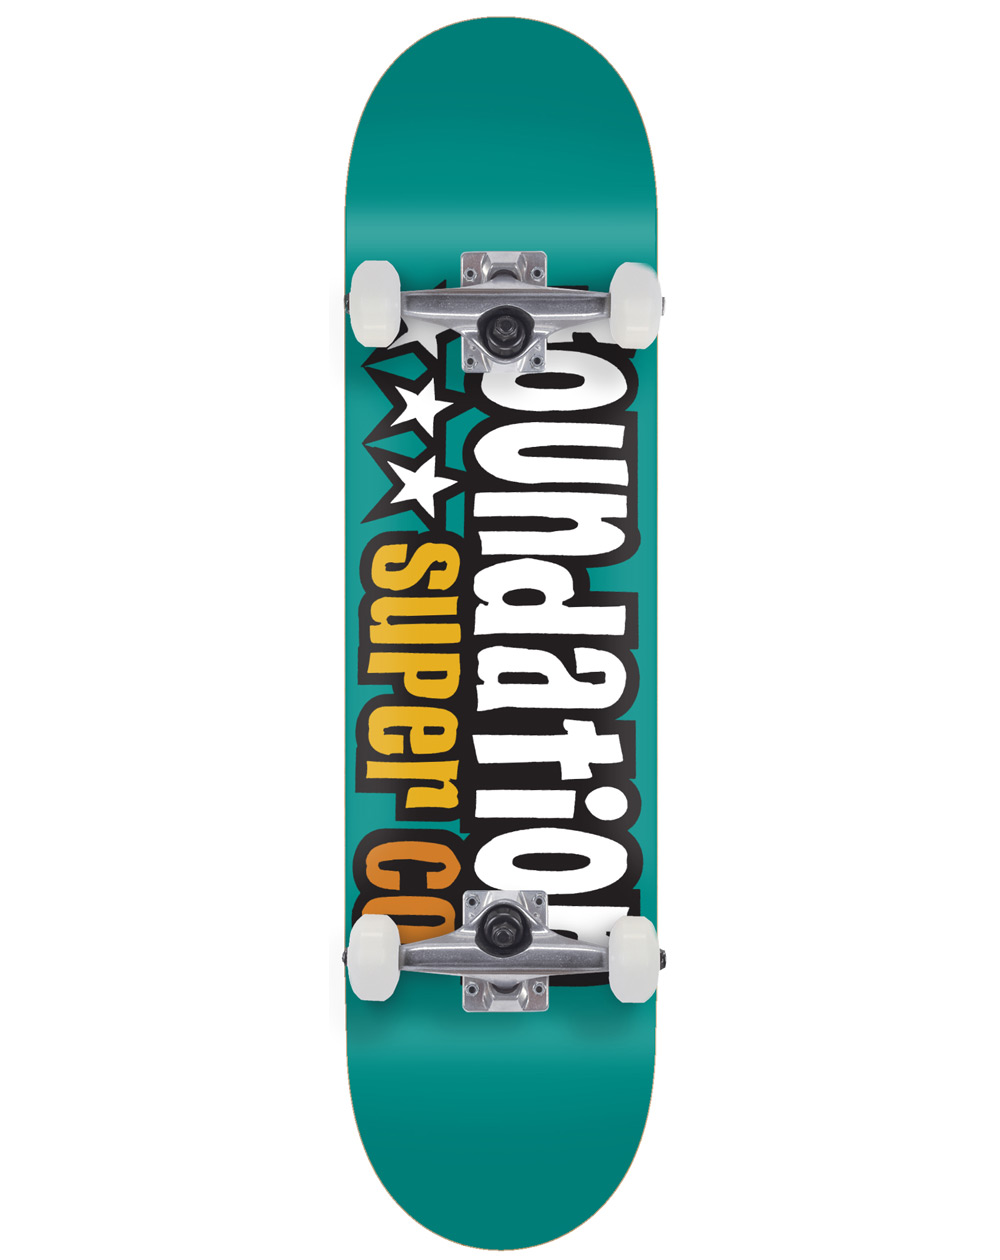 Foundation Skateboard Completo 3 Star 7.80" Teal